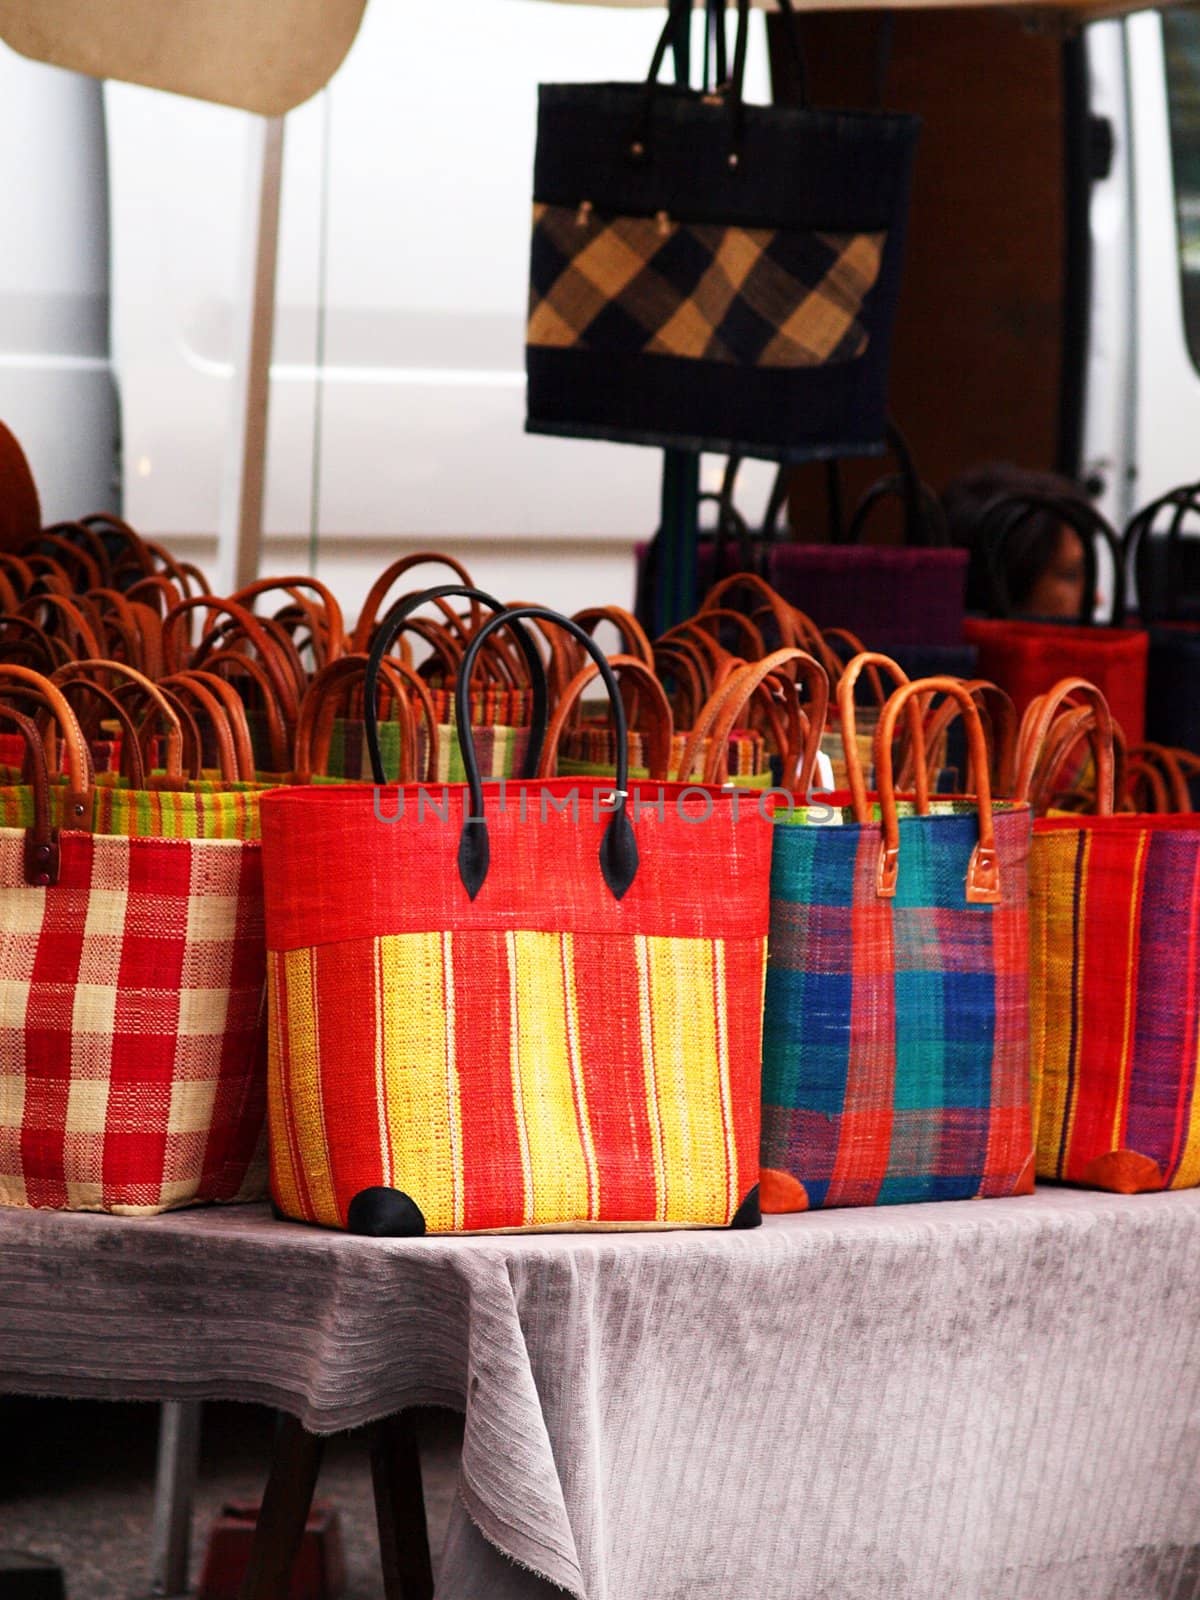 Outdoors purse market place, multi color purses